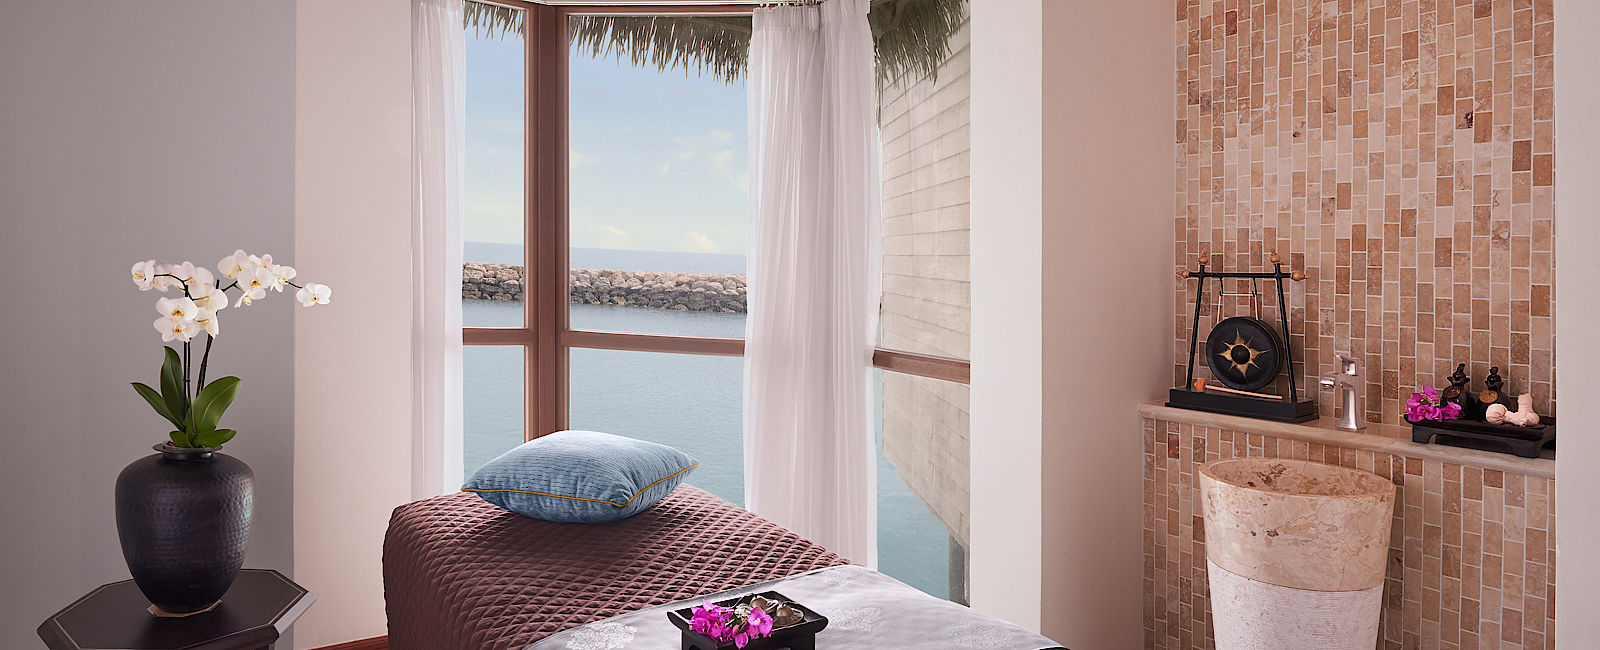 HOTEL ANGEBOTE
 Banana Island Resort Doha: -20% 
